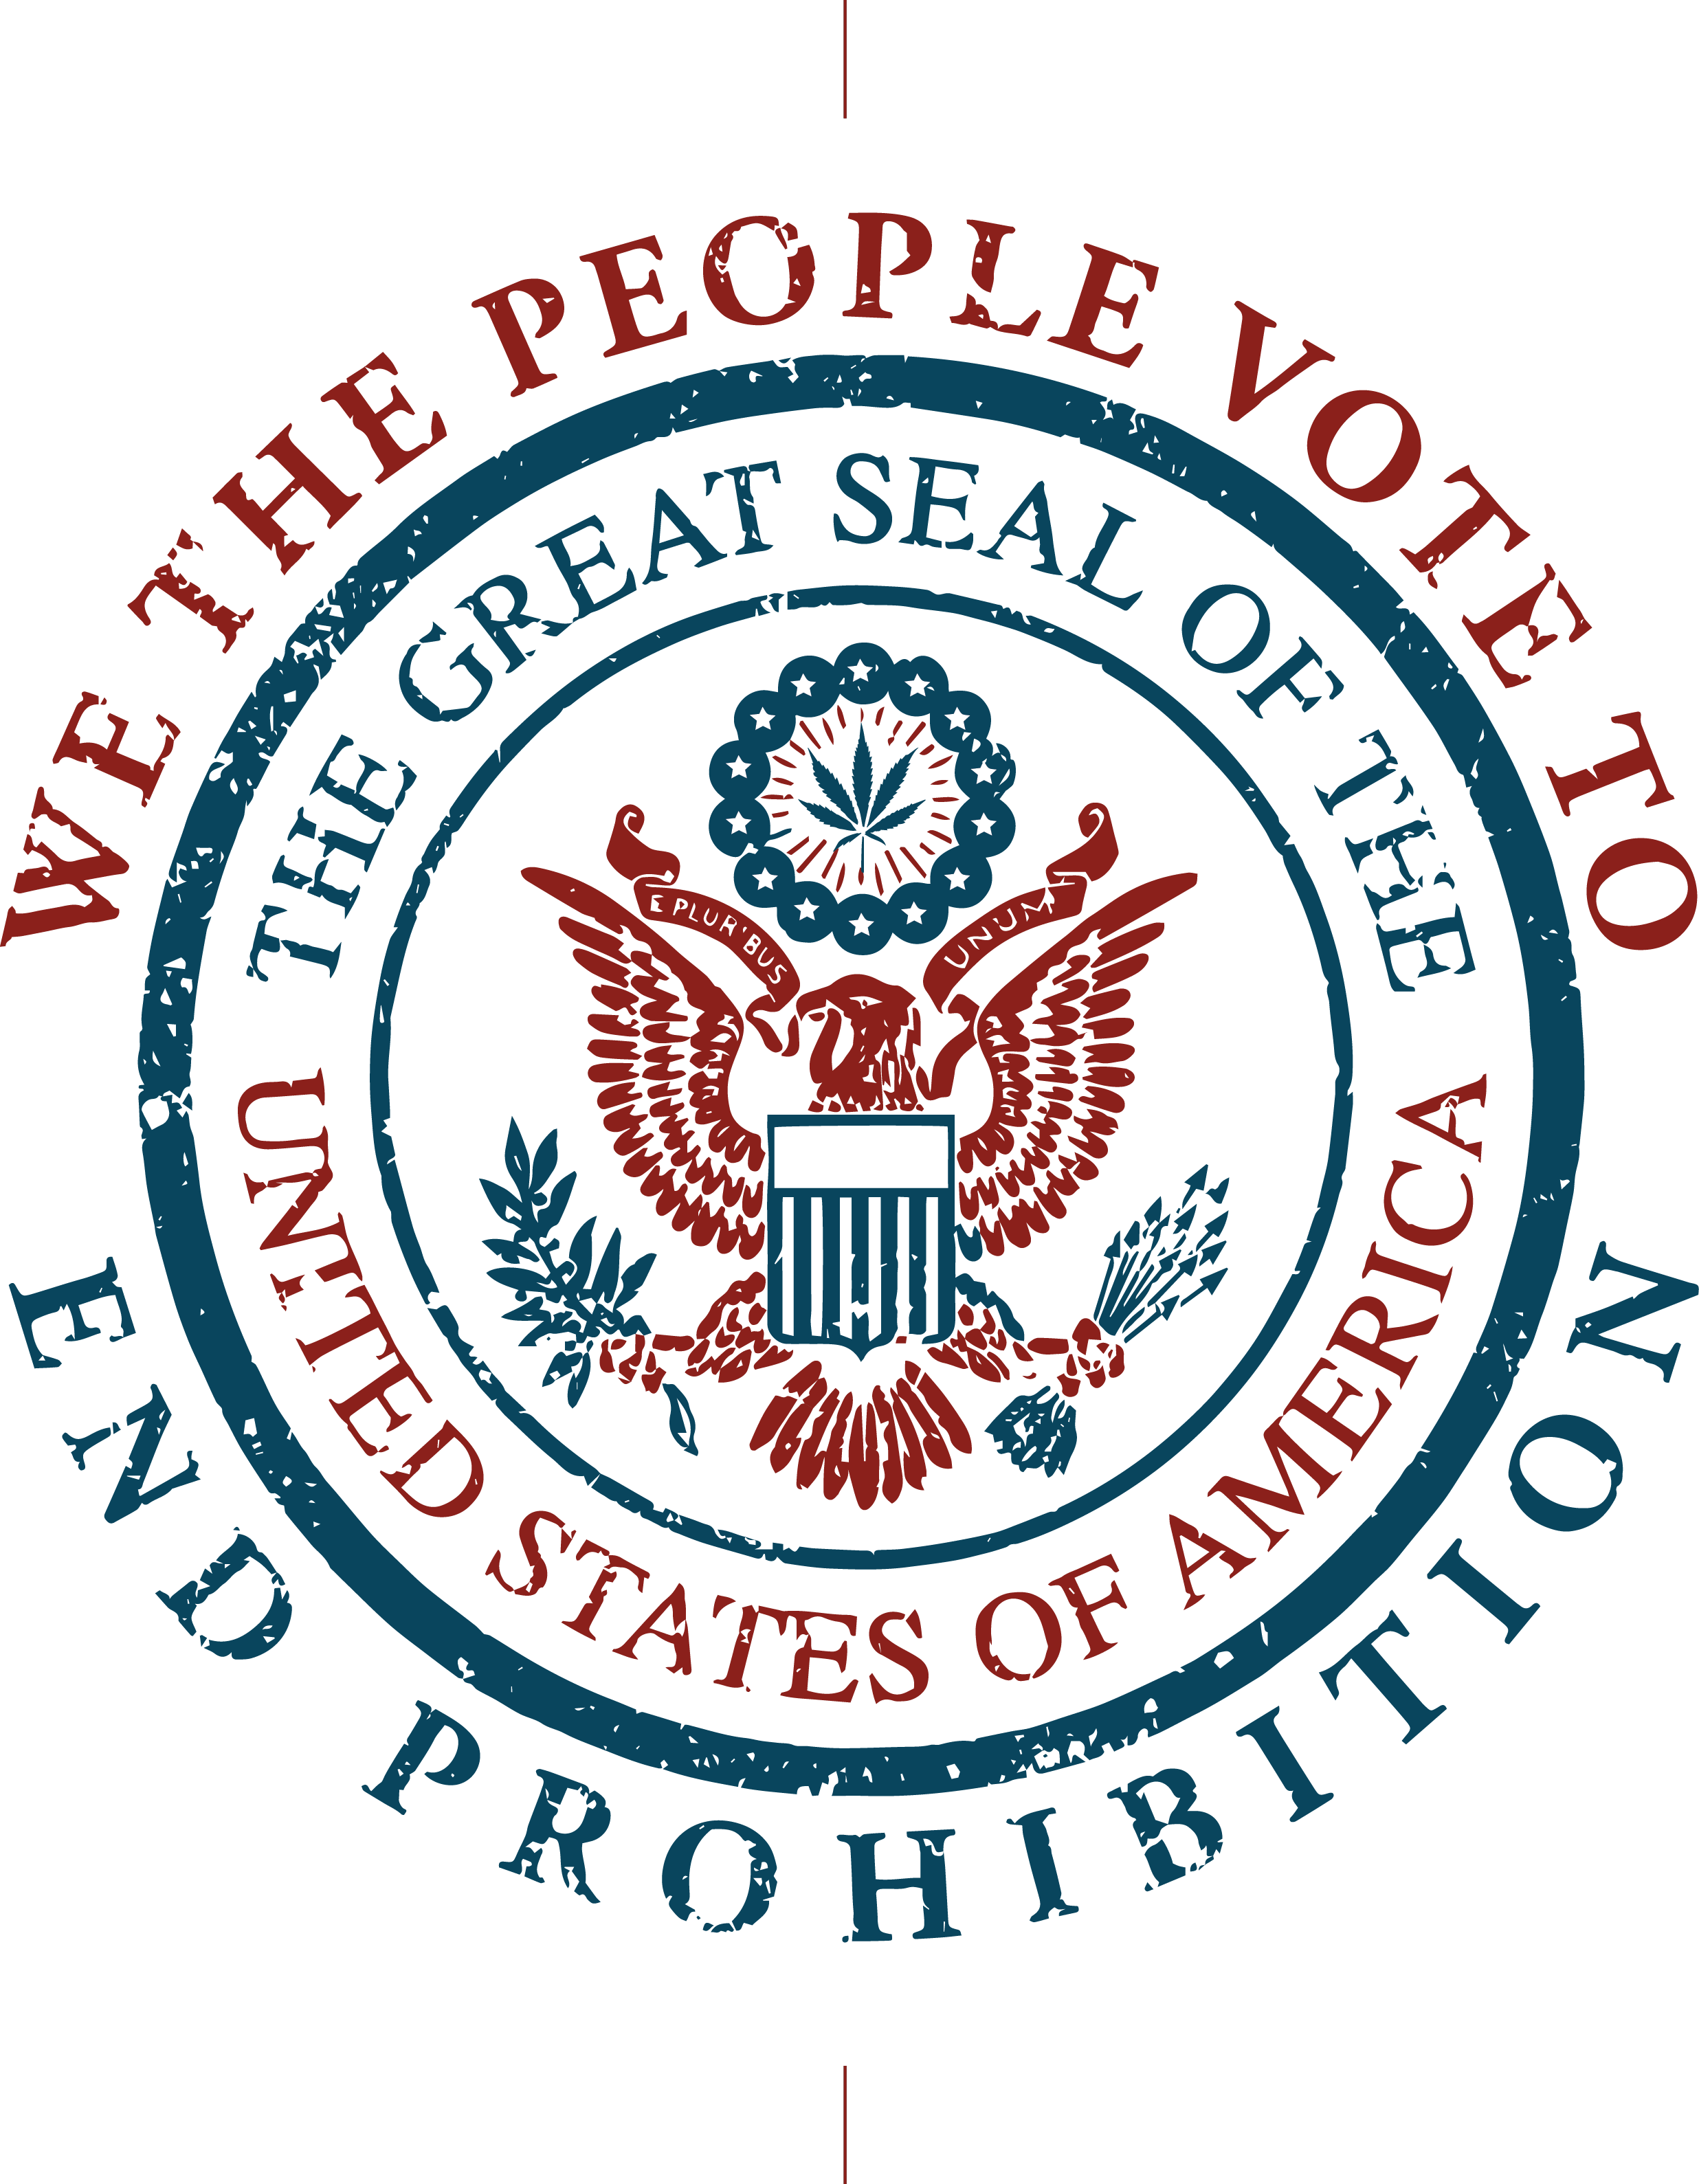 Vote to End Prohibition